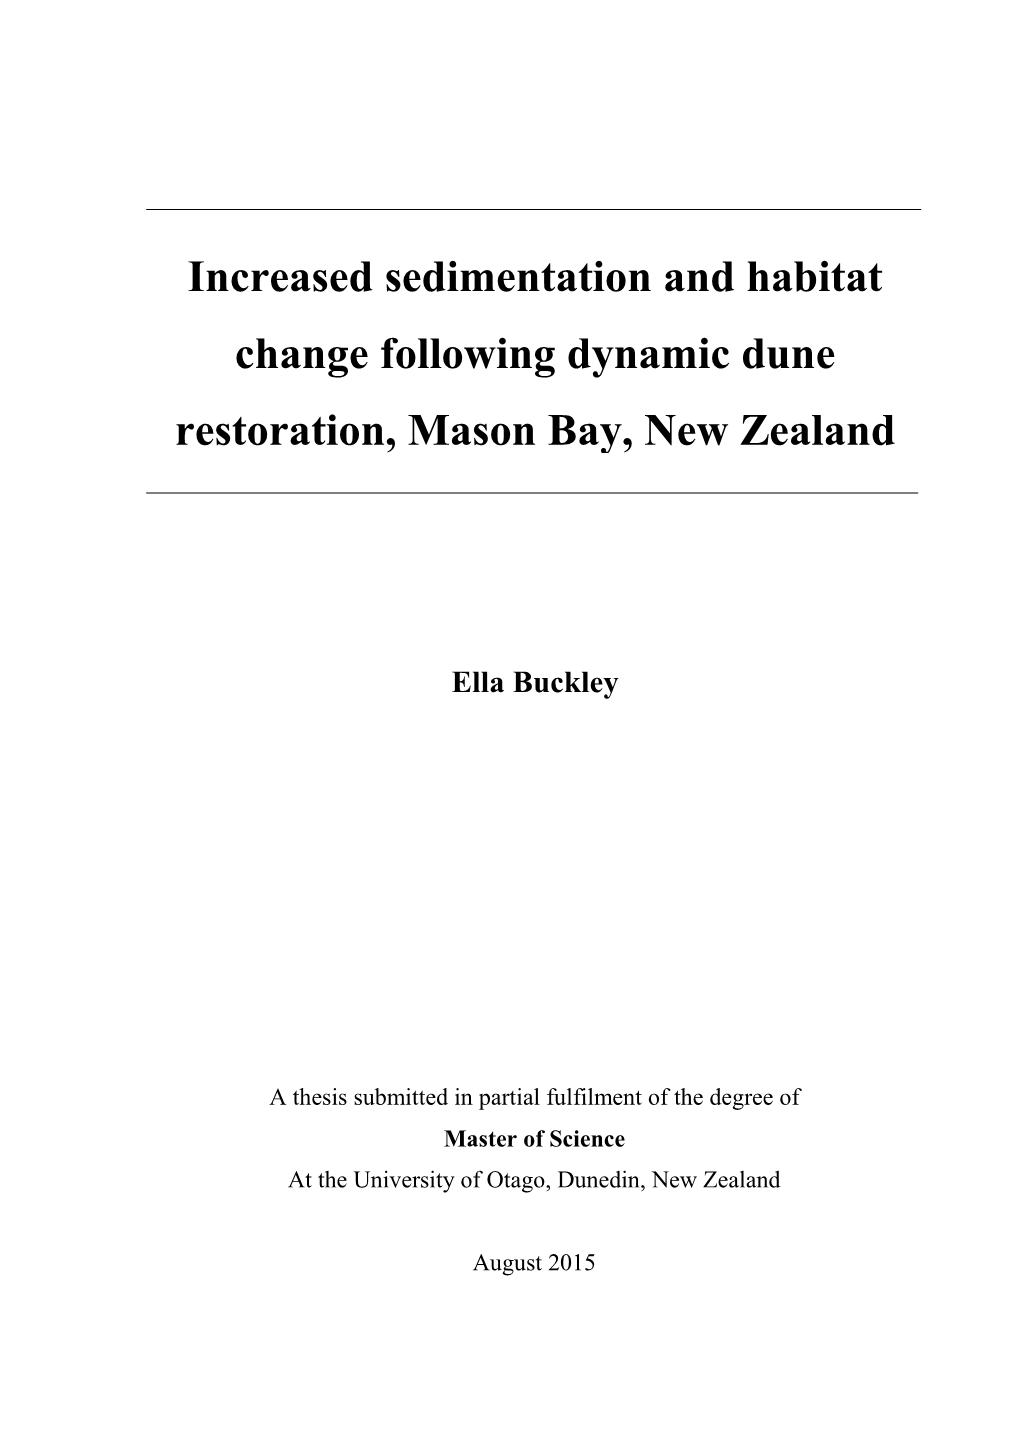 Increased Sedimentation and Habitat Change Following Dynamic Dune Restoration, Mason Bay, New Zealand